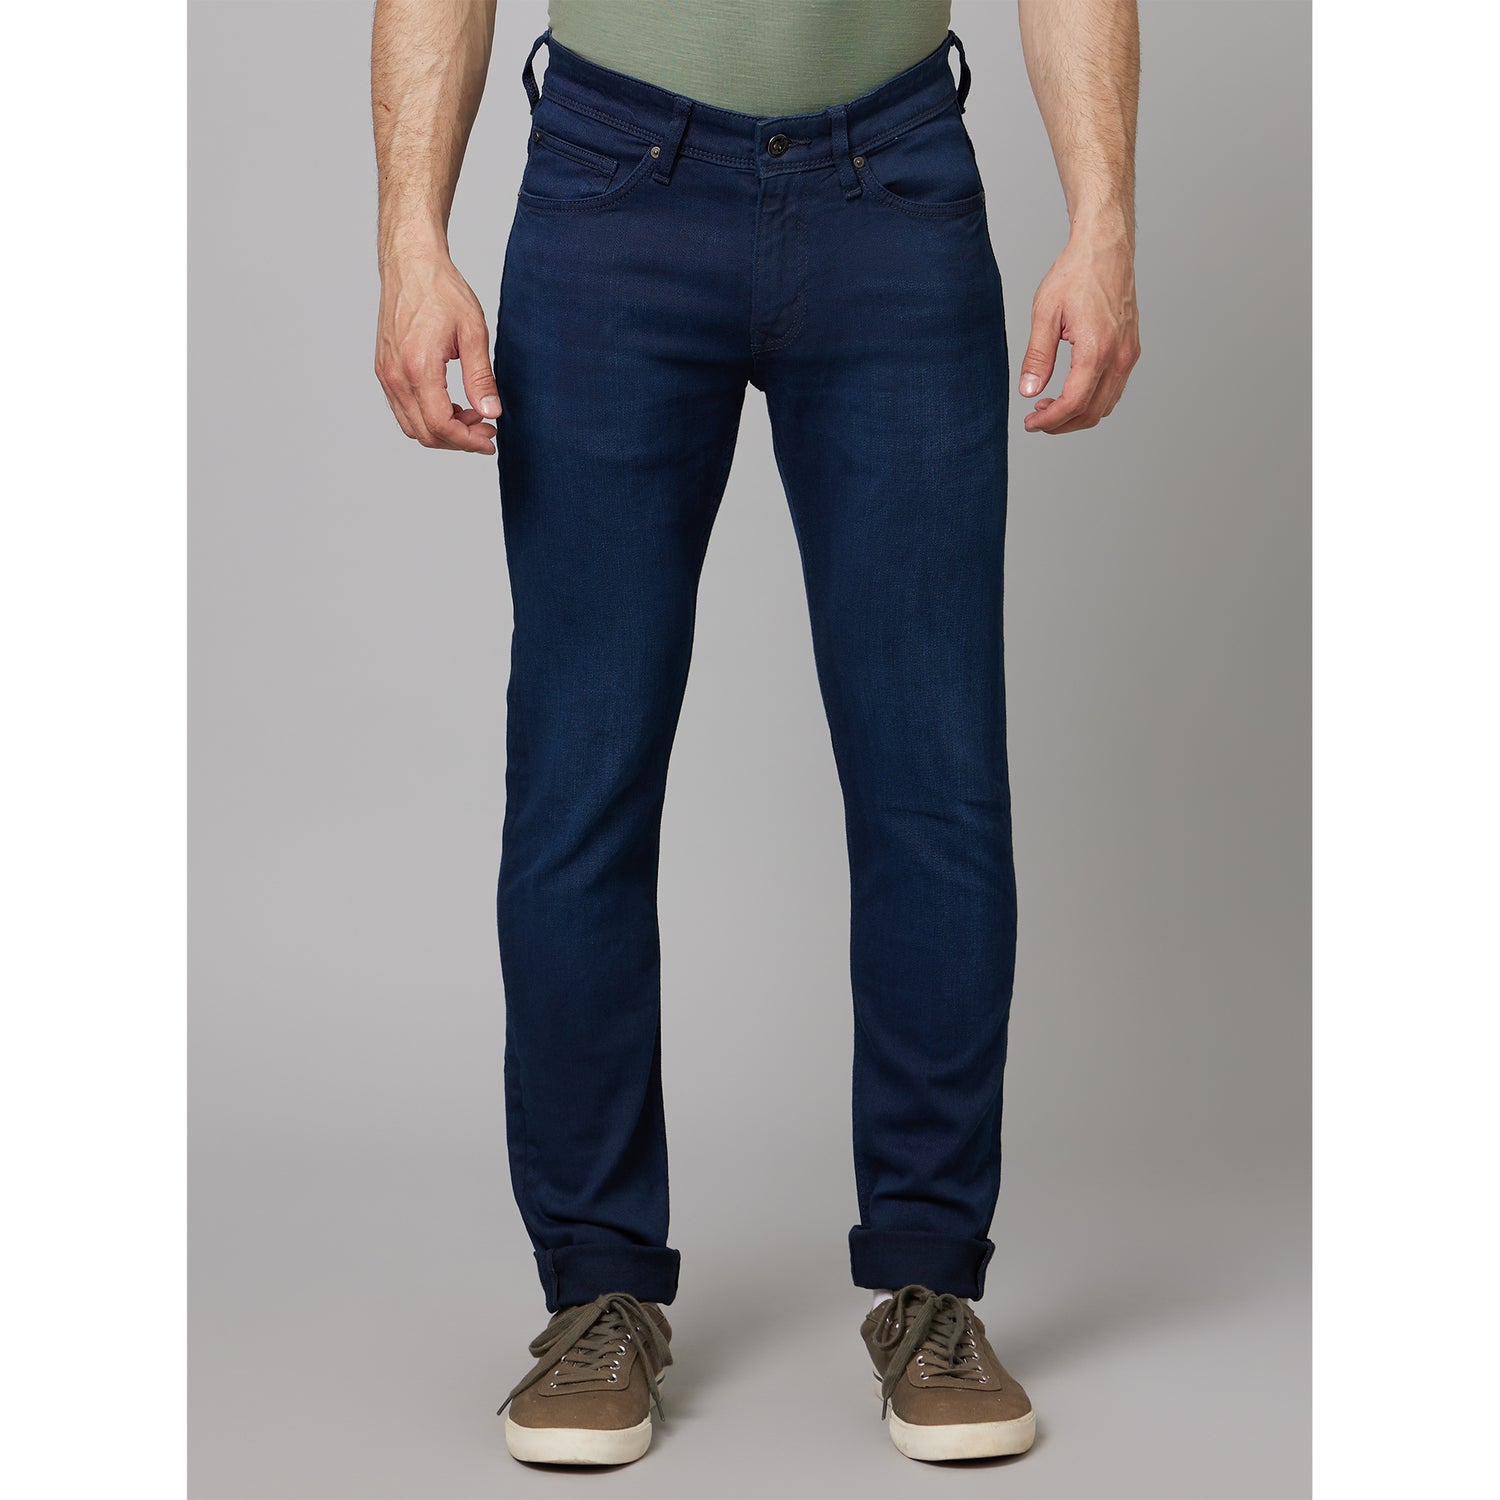 Navy Cotton Italian Premium Denim Jeans (VOTEN)